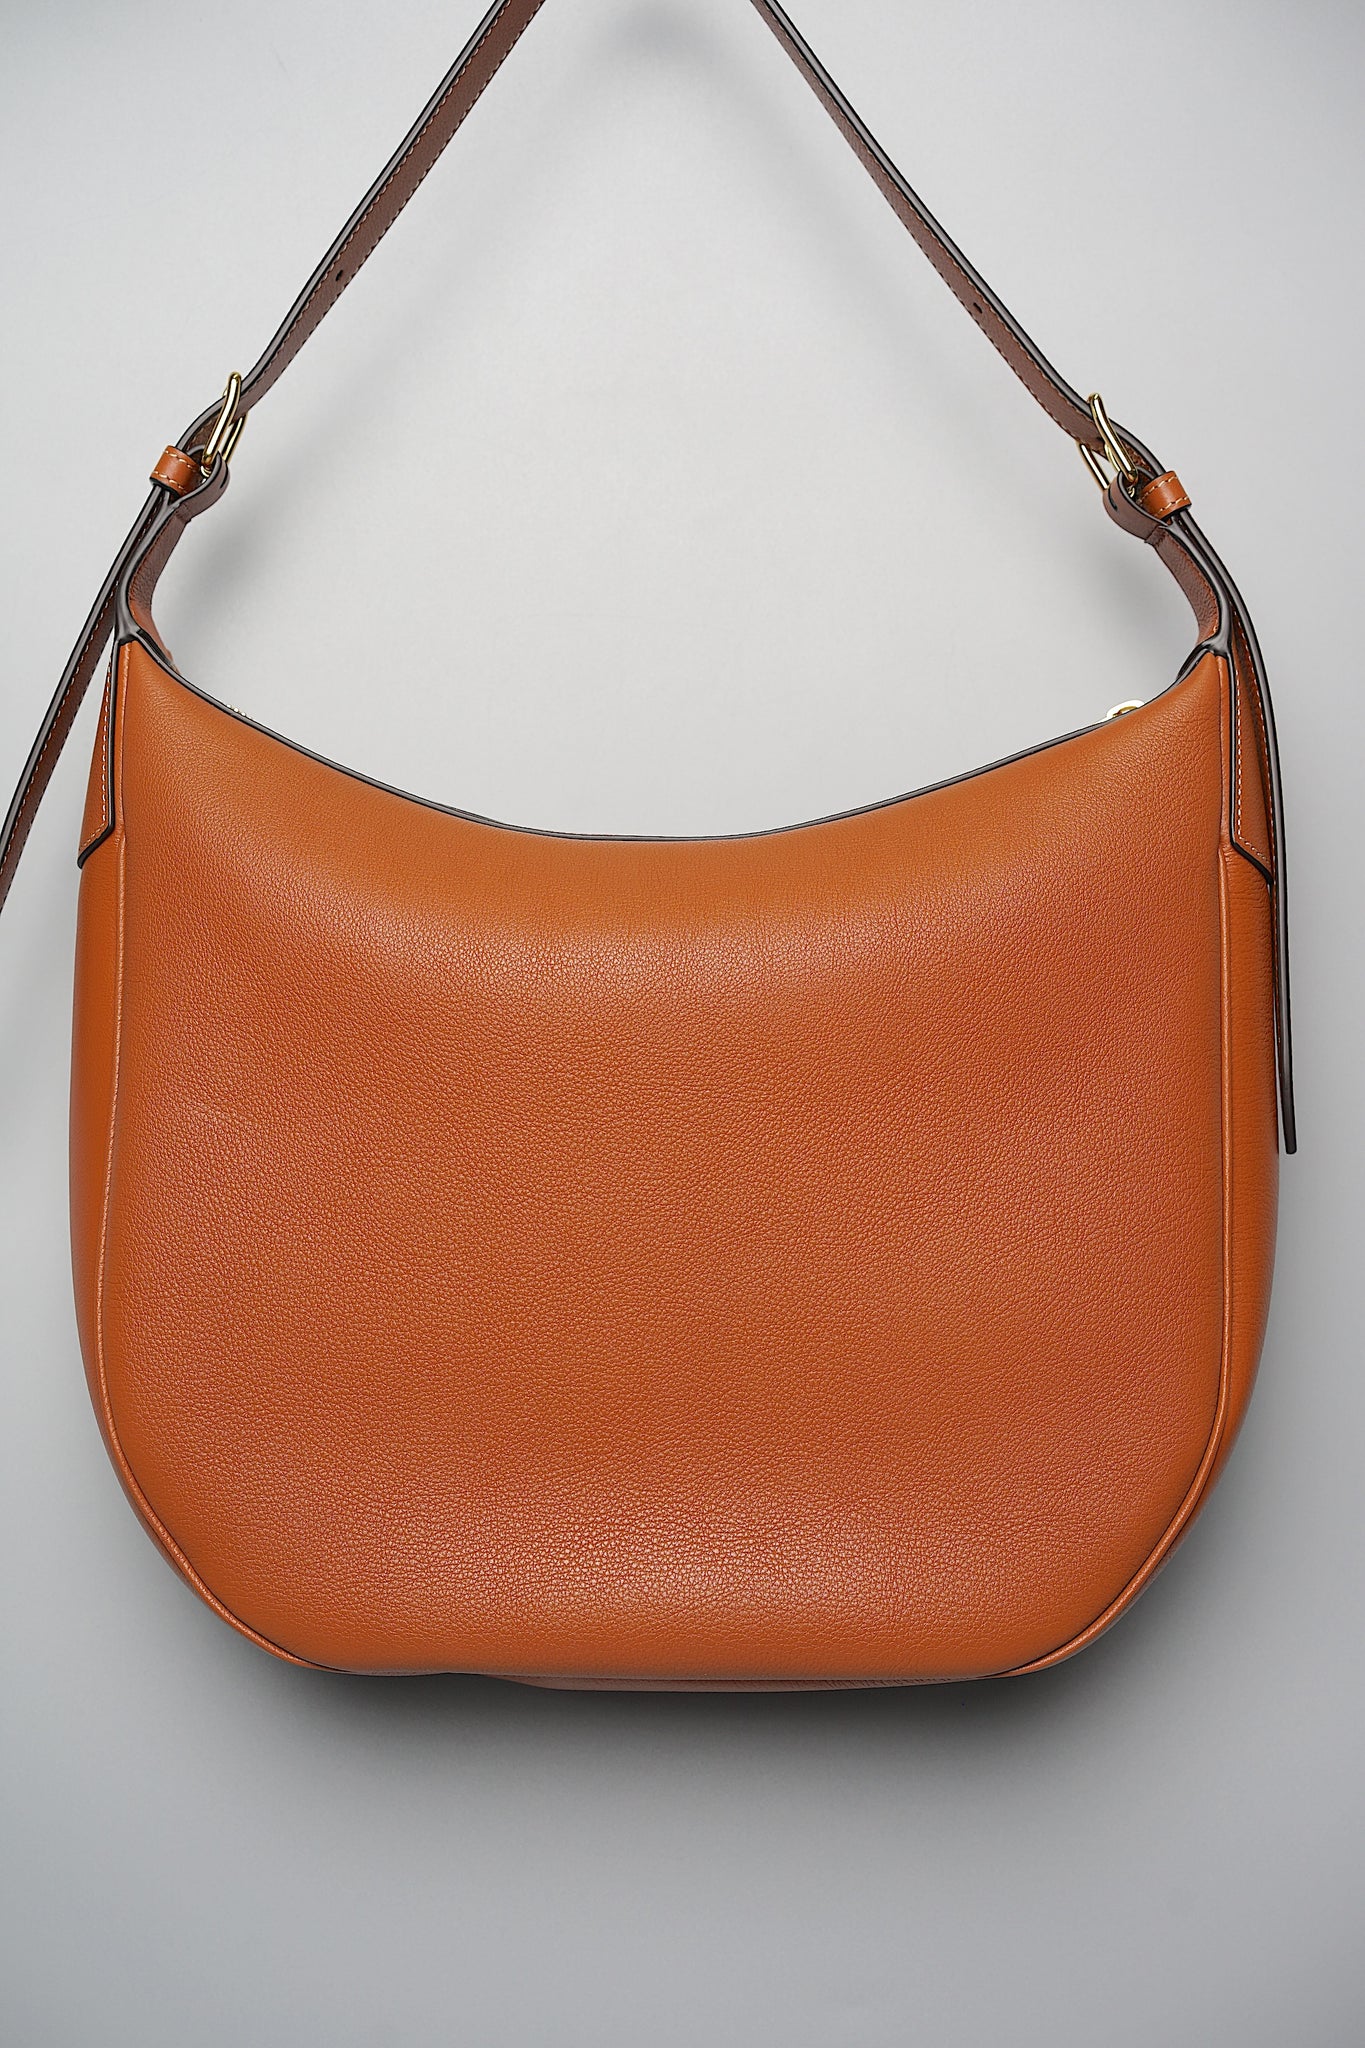 Celine Heloise Bag in Tan (Brand New)